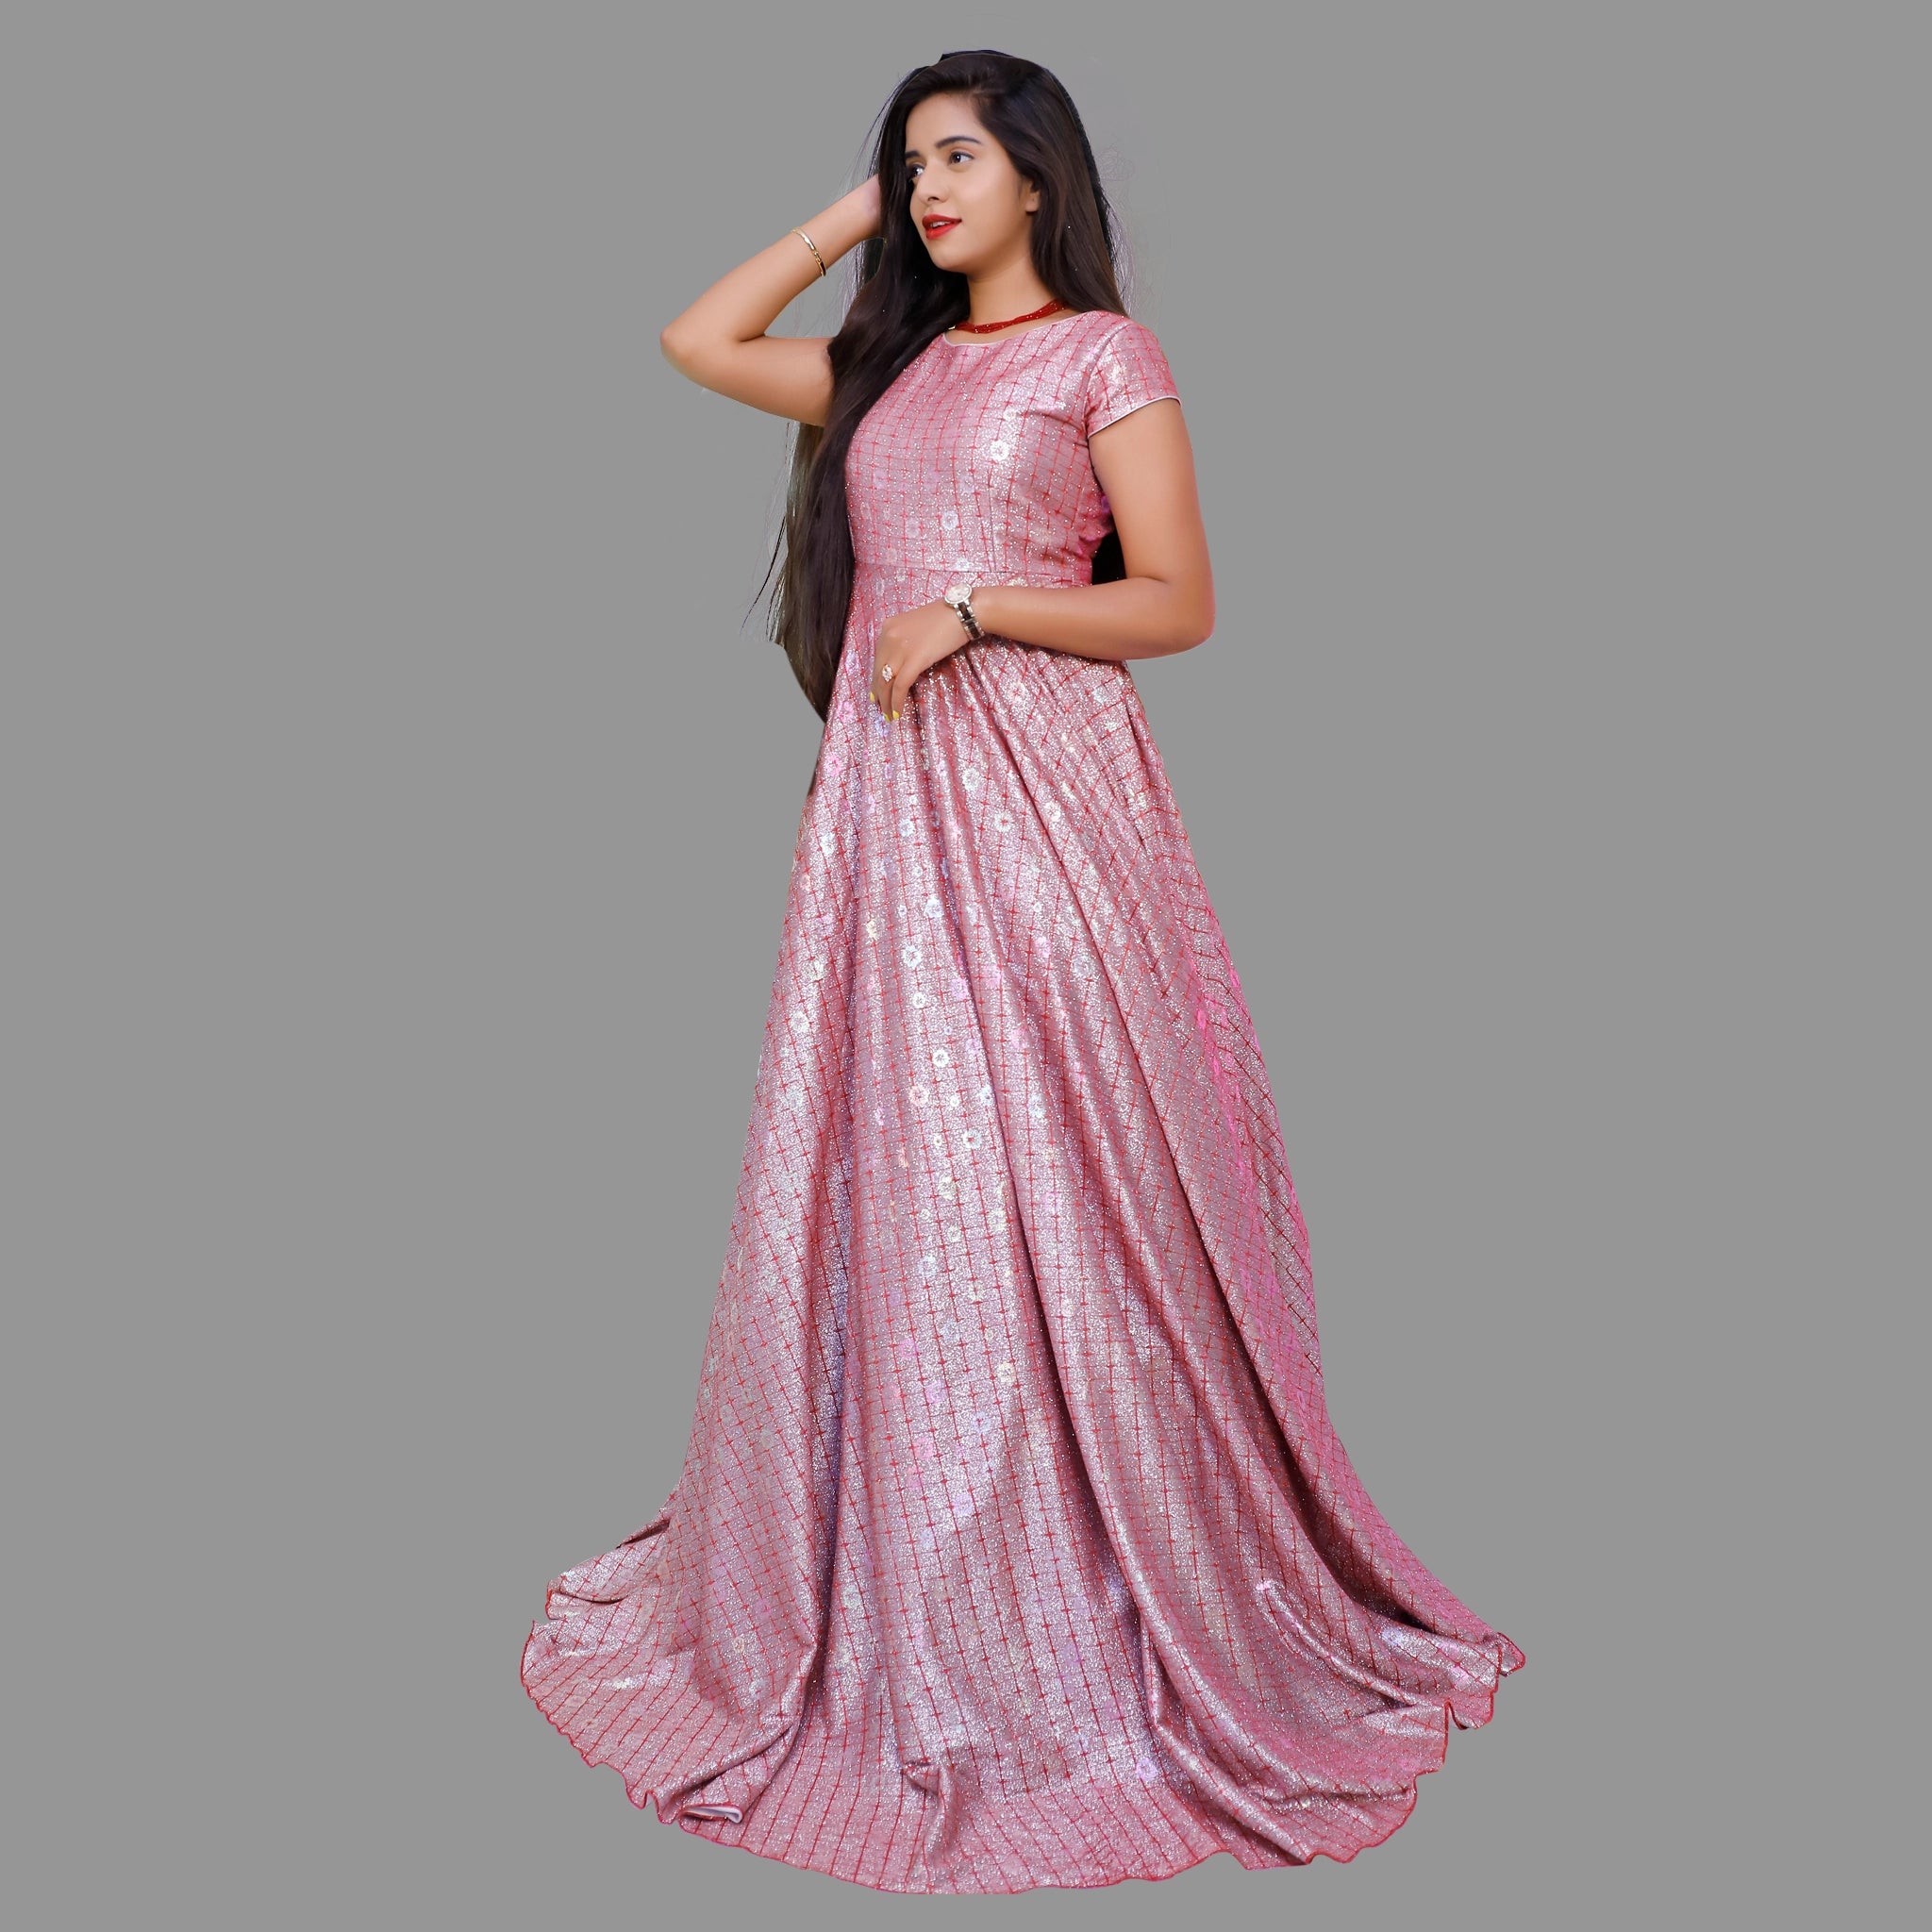 Buy Pink Color Designer Gown Online : 162917 - Gown